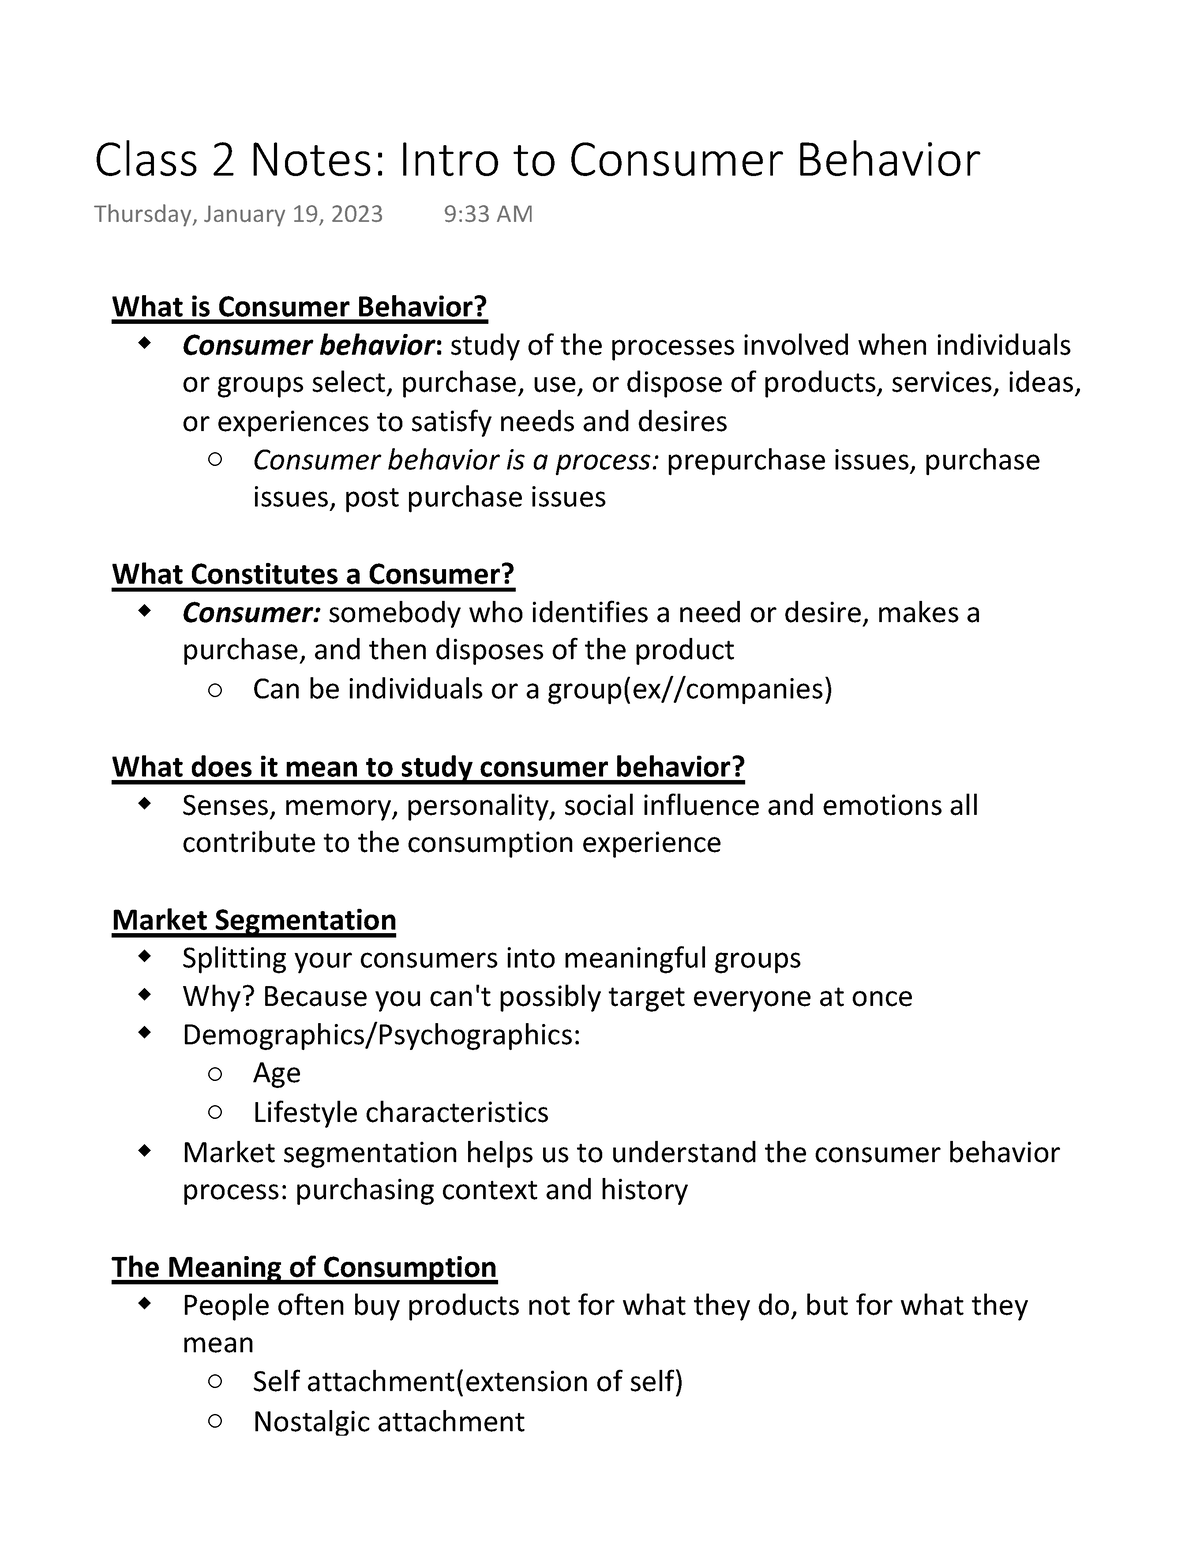 class-2-notes-intro-to-consumer-behavior-what-is-consumer-behavior